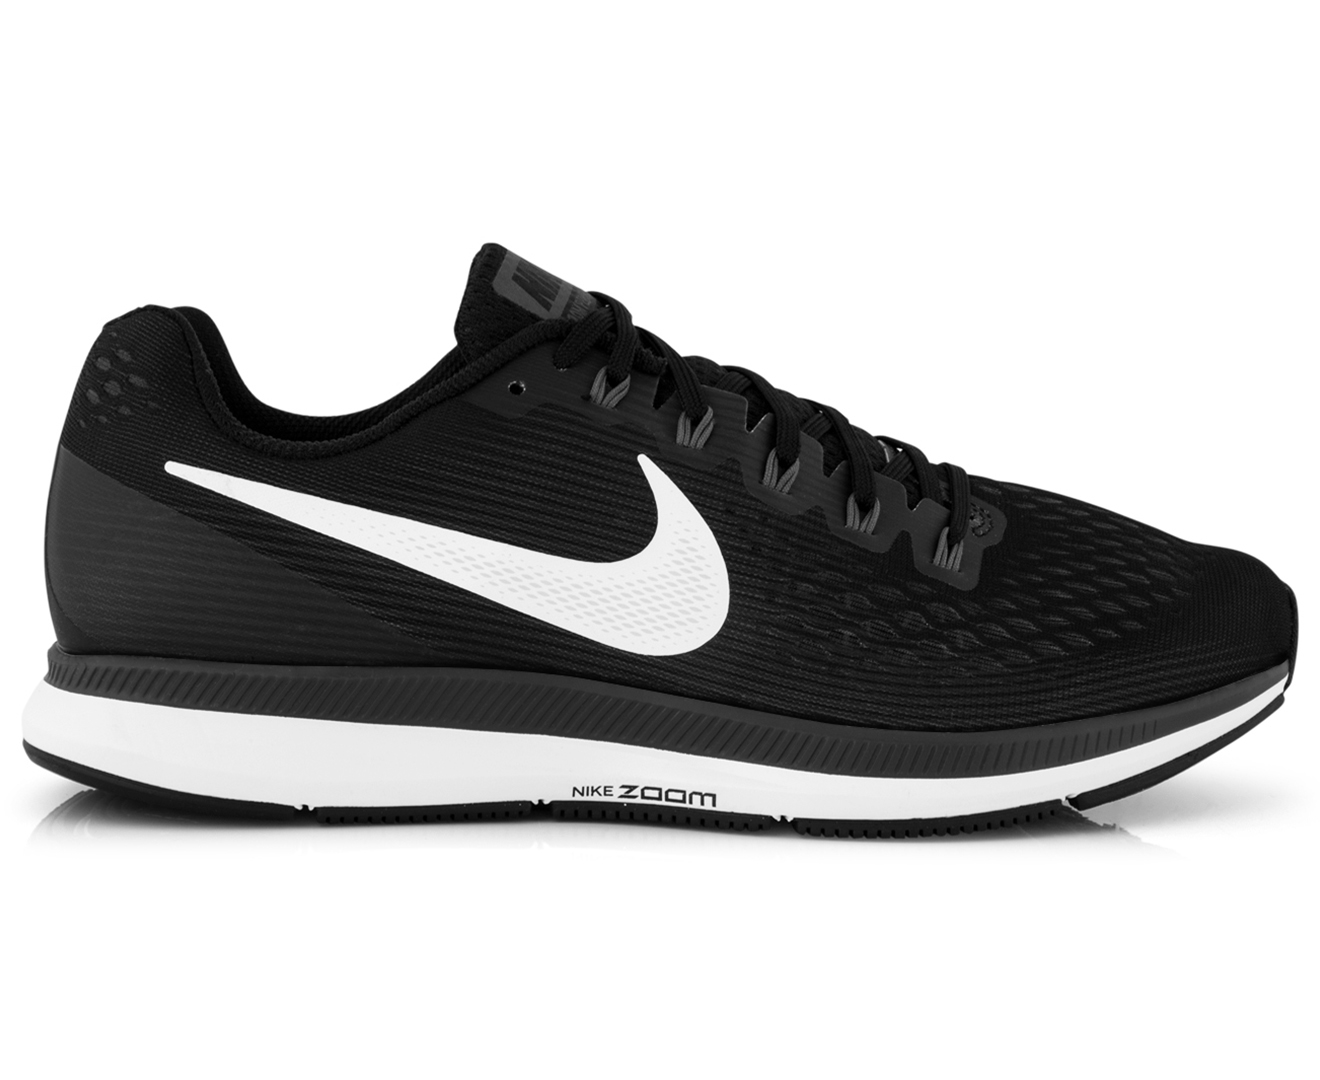 Nike Men's Air Zoom Pegasus 34 Shoe - Black/White-Dark Grey | Catch.co.nz